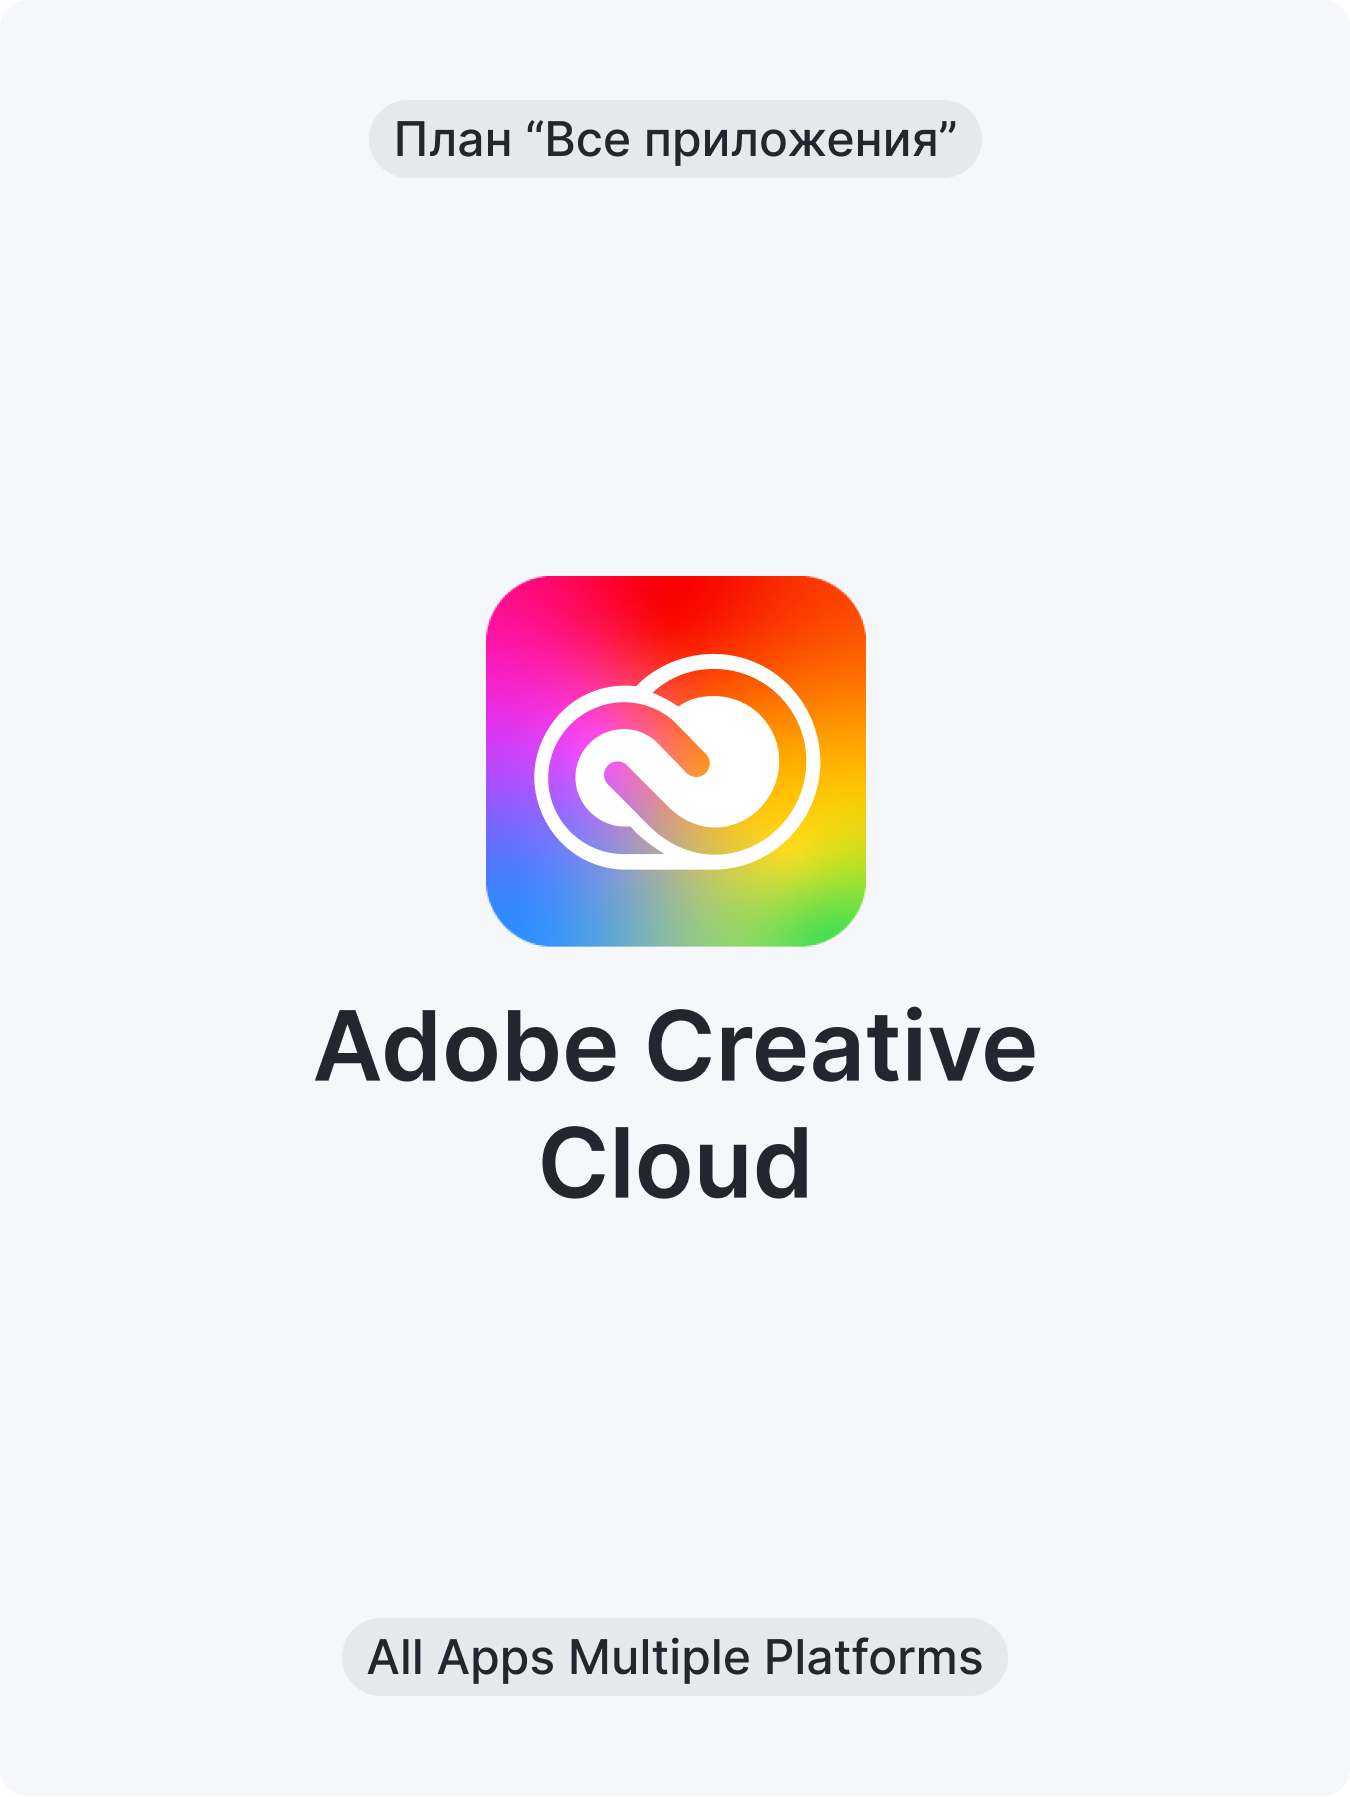 Adobe Creative Cloud (Все приложения)